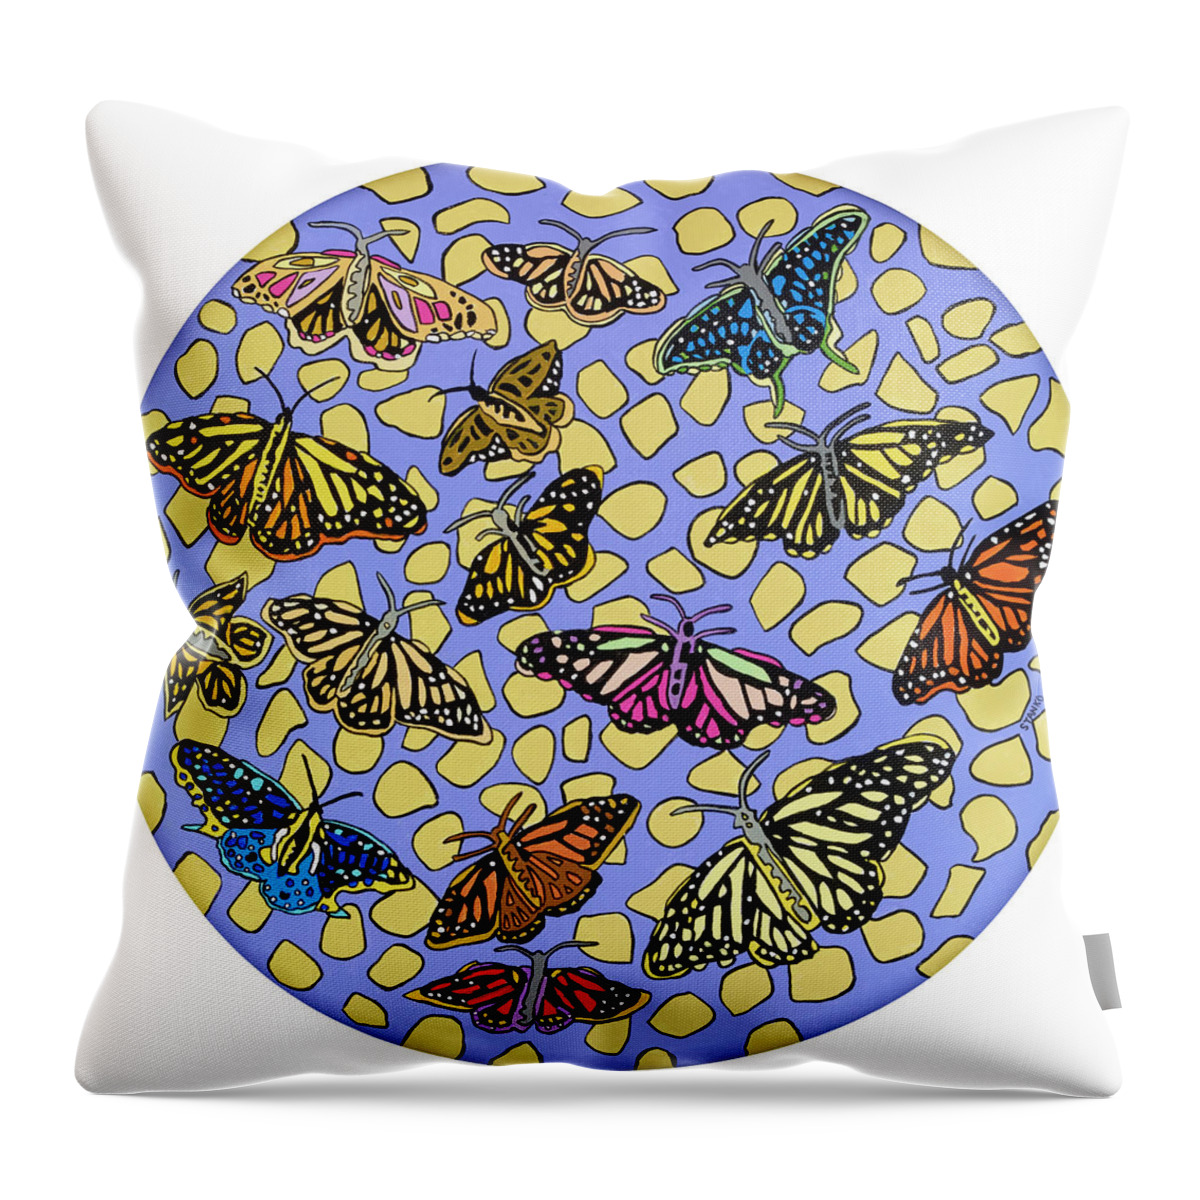 Butterfly Butterflies Pop Art Throw Pillow featuring the painting Butterflies by Mike Stanko